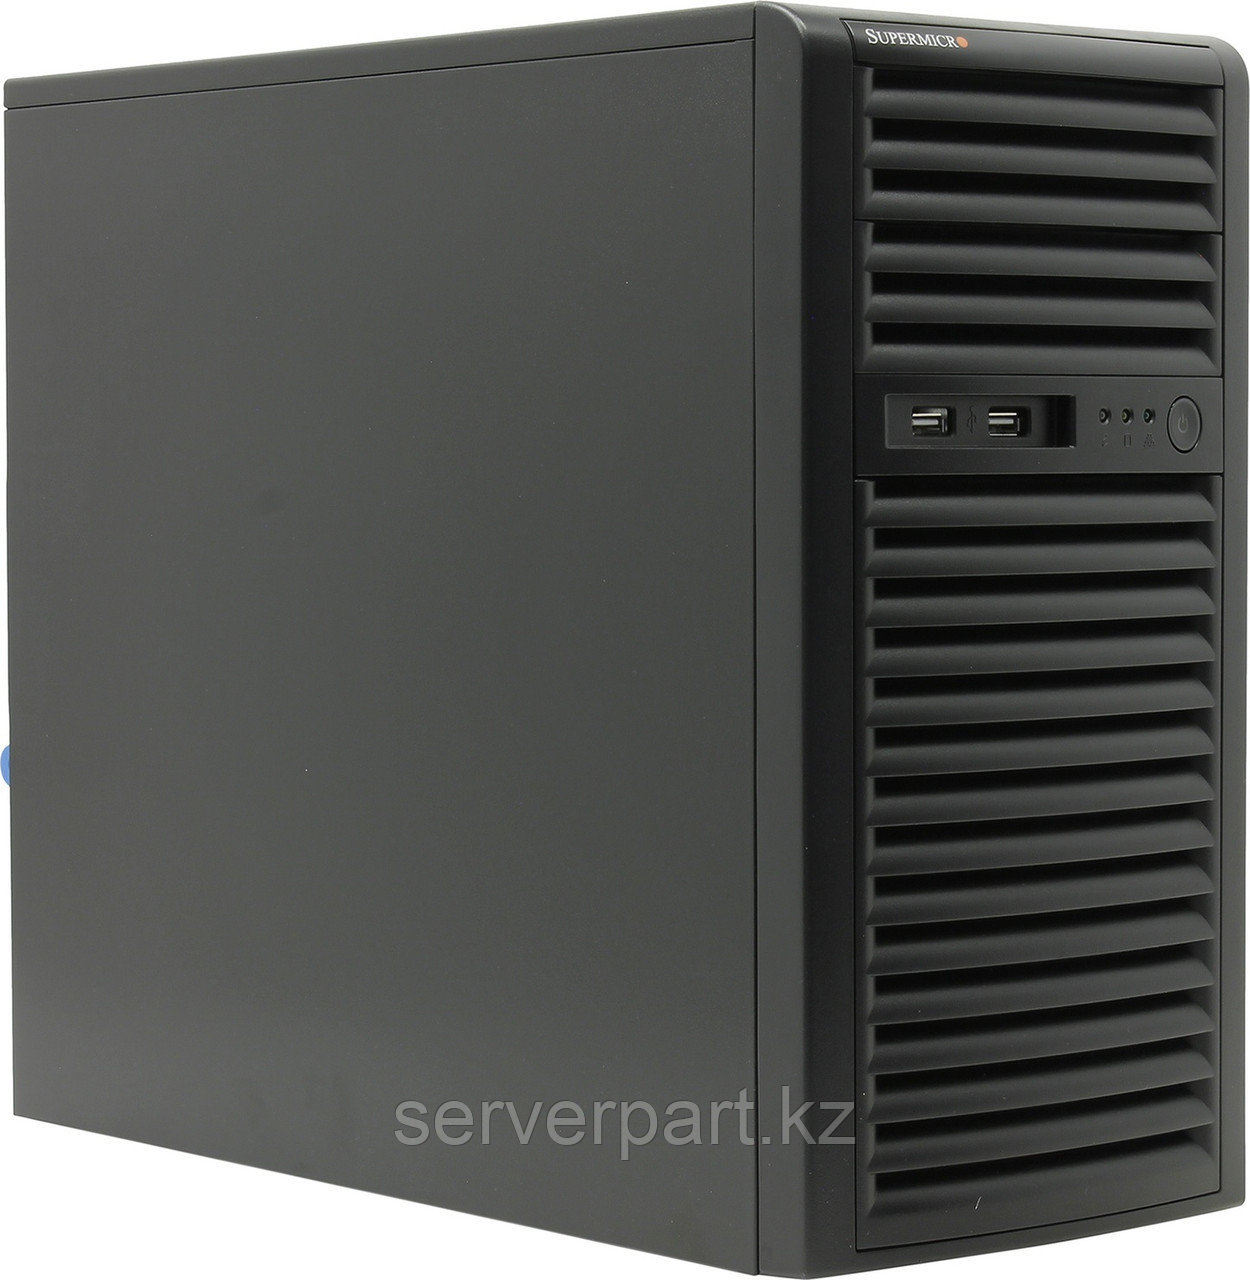 Сервер Supermicro SYS-5039C Tower 4LFF/4-core intel xeon E2124 3.3GHz/64GB EUDIMM/1x240GB SSD RI Hyb, фото 1